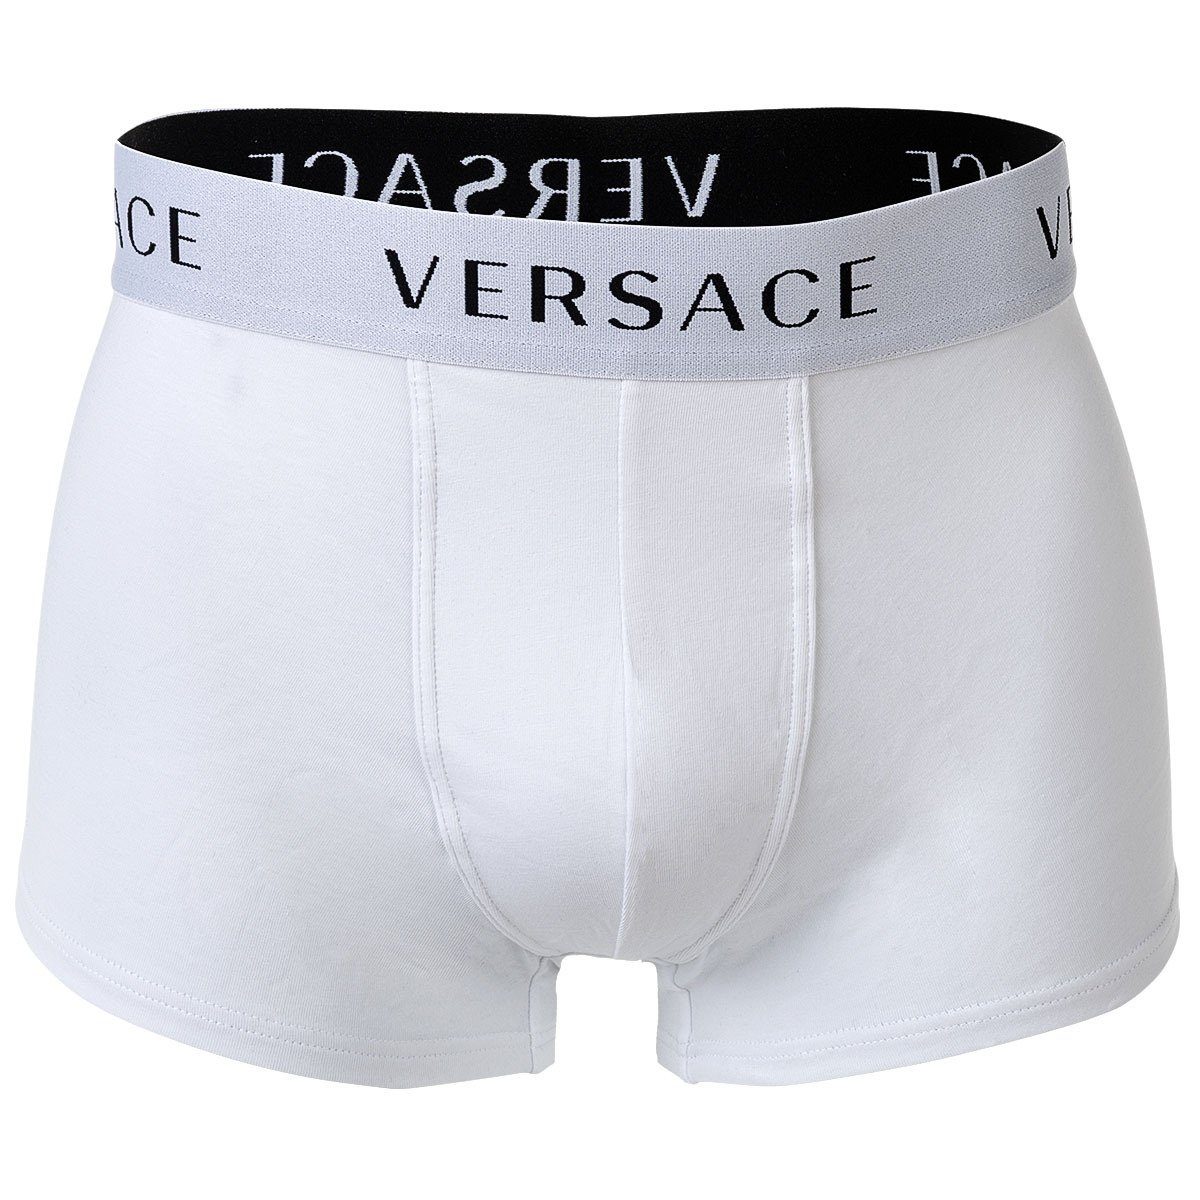 Versace Boxer Herren Boxer Trunk - 2er Weiß/Blau Pack Shorts